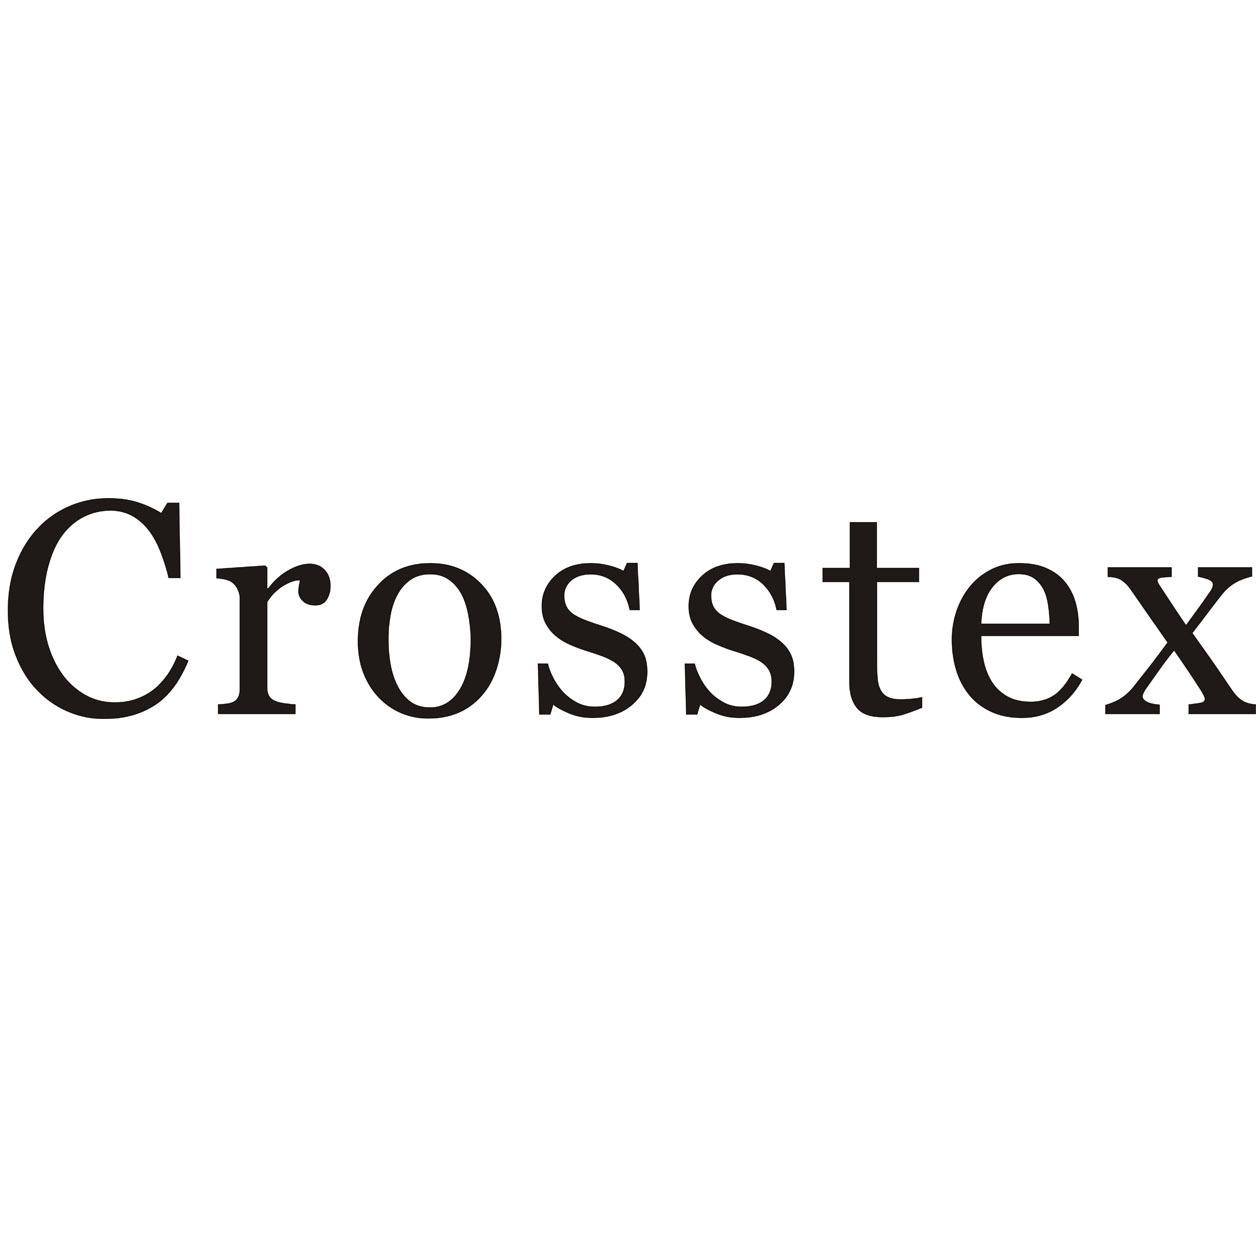 CROSSTEX